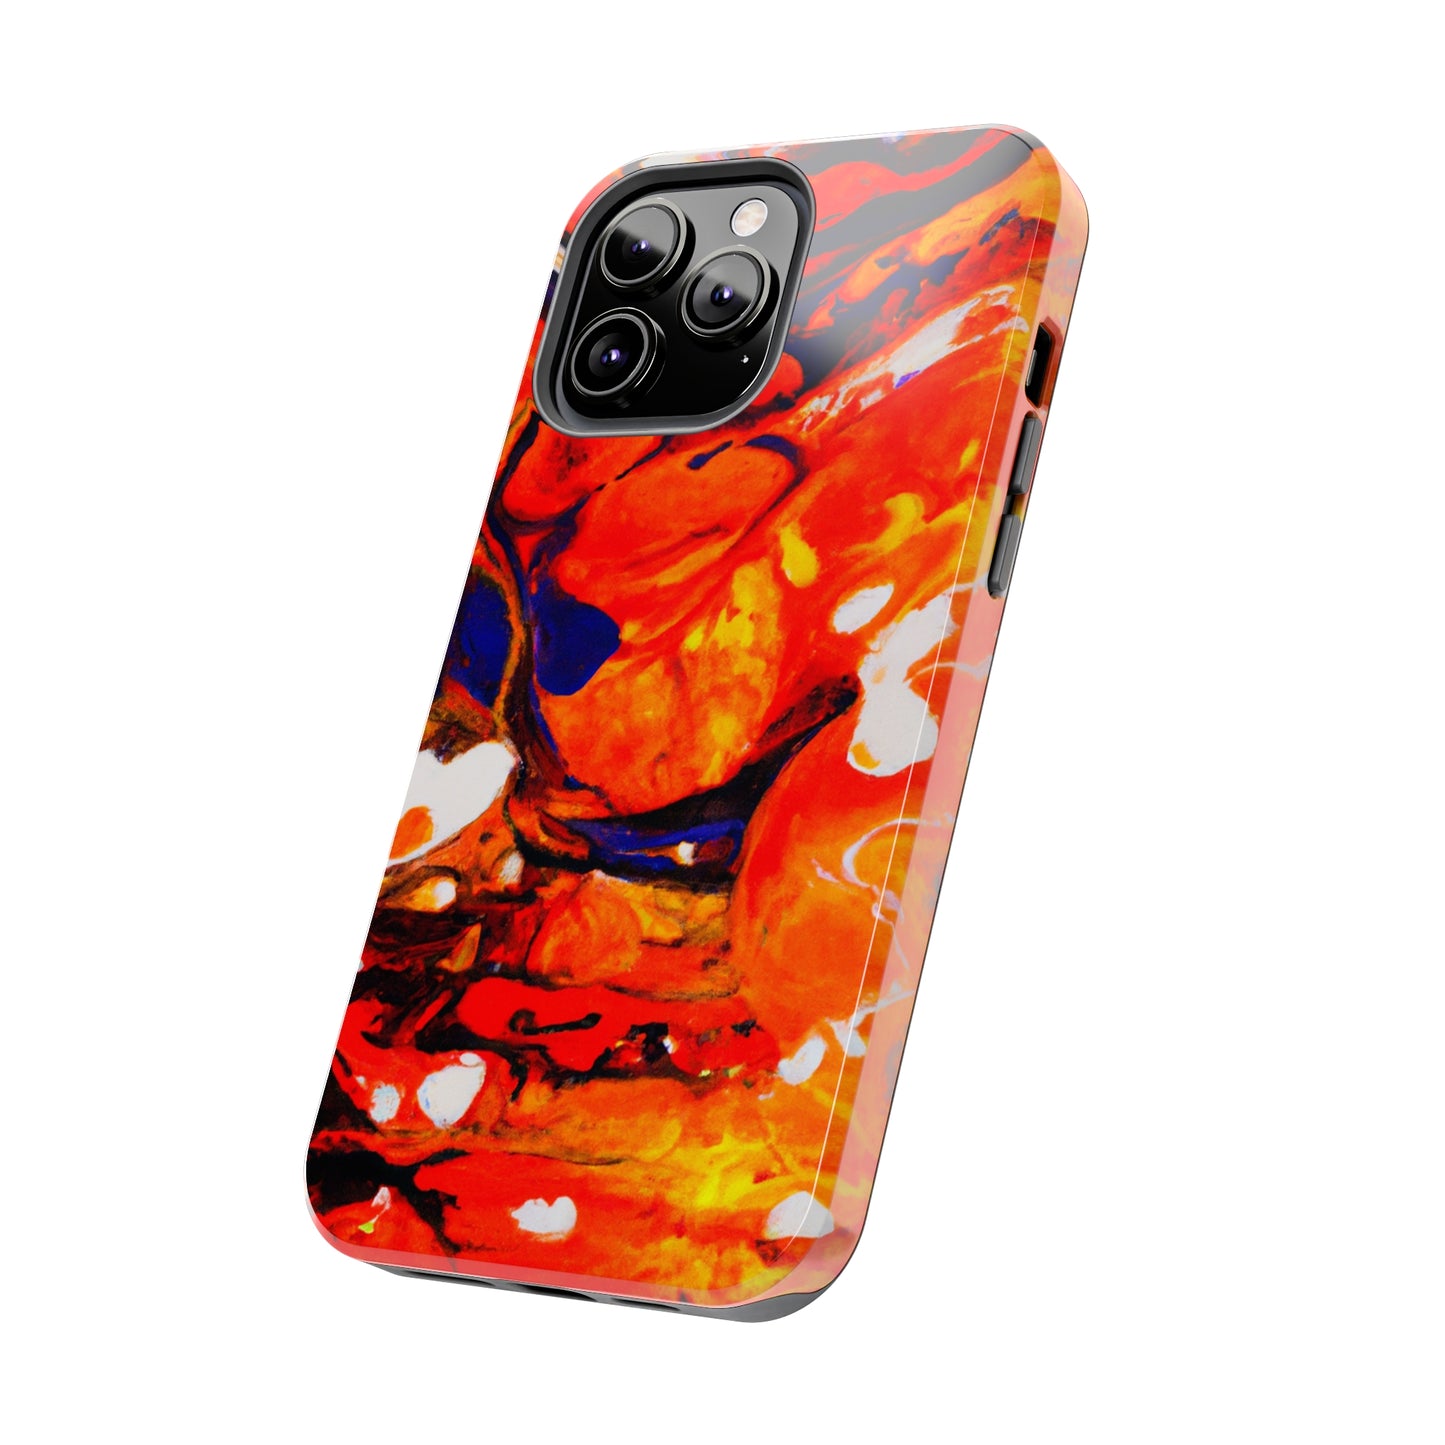 Tough Apple iPhone Cases Ft. Abstract Halloween Pumpkin